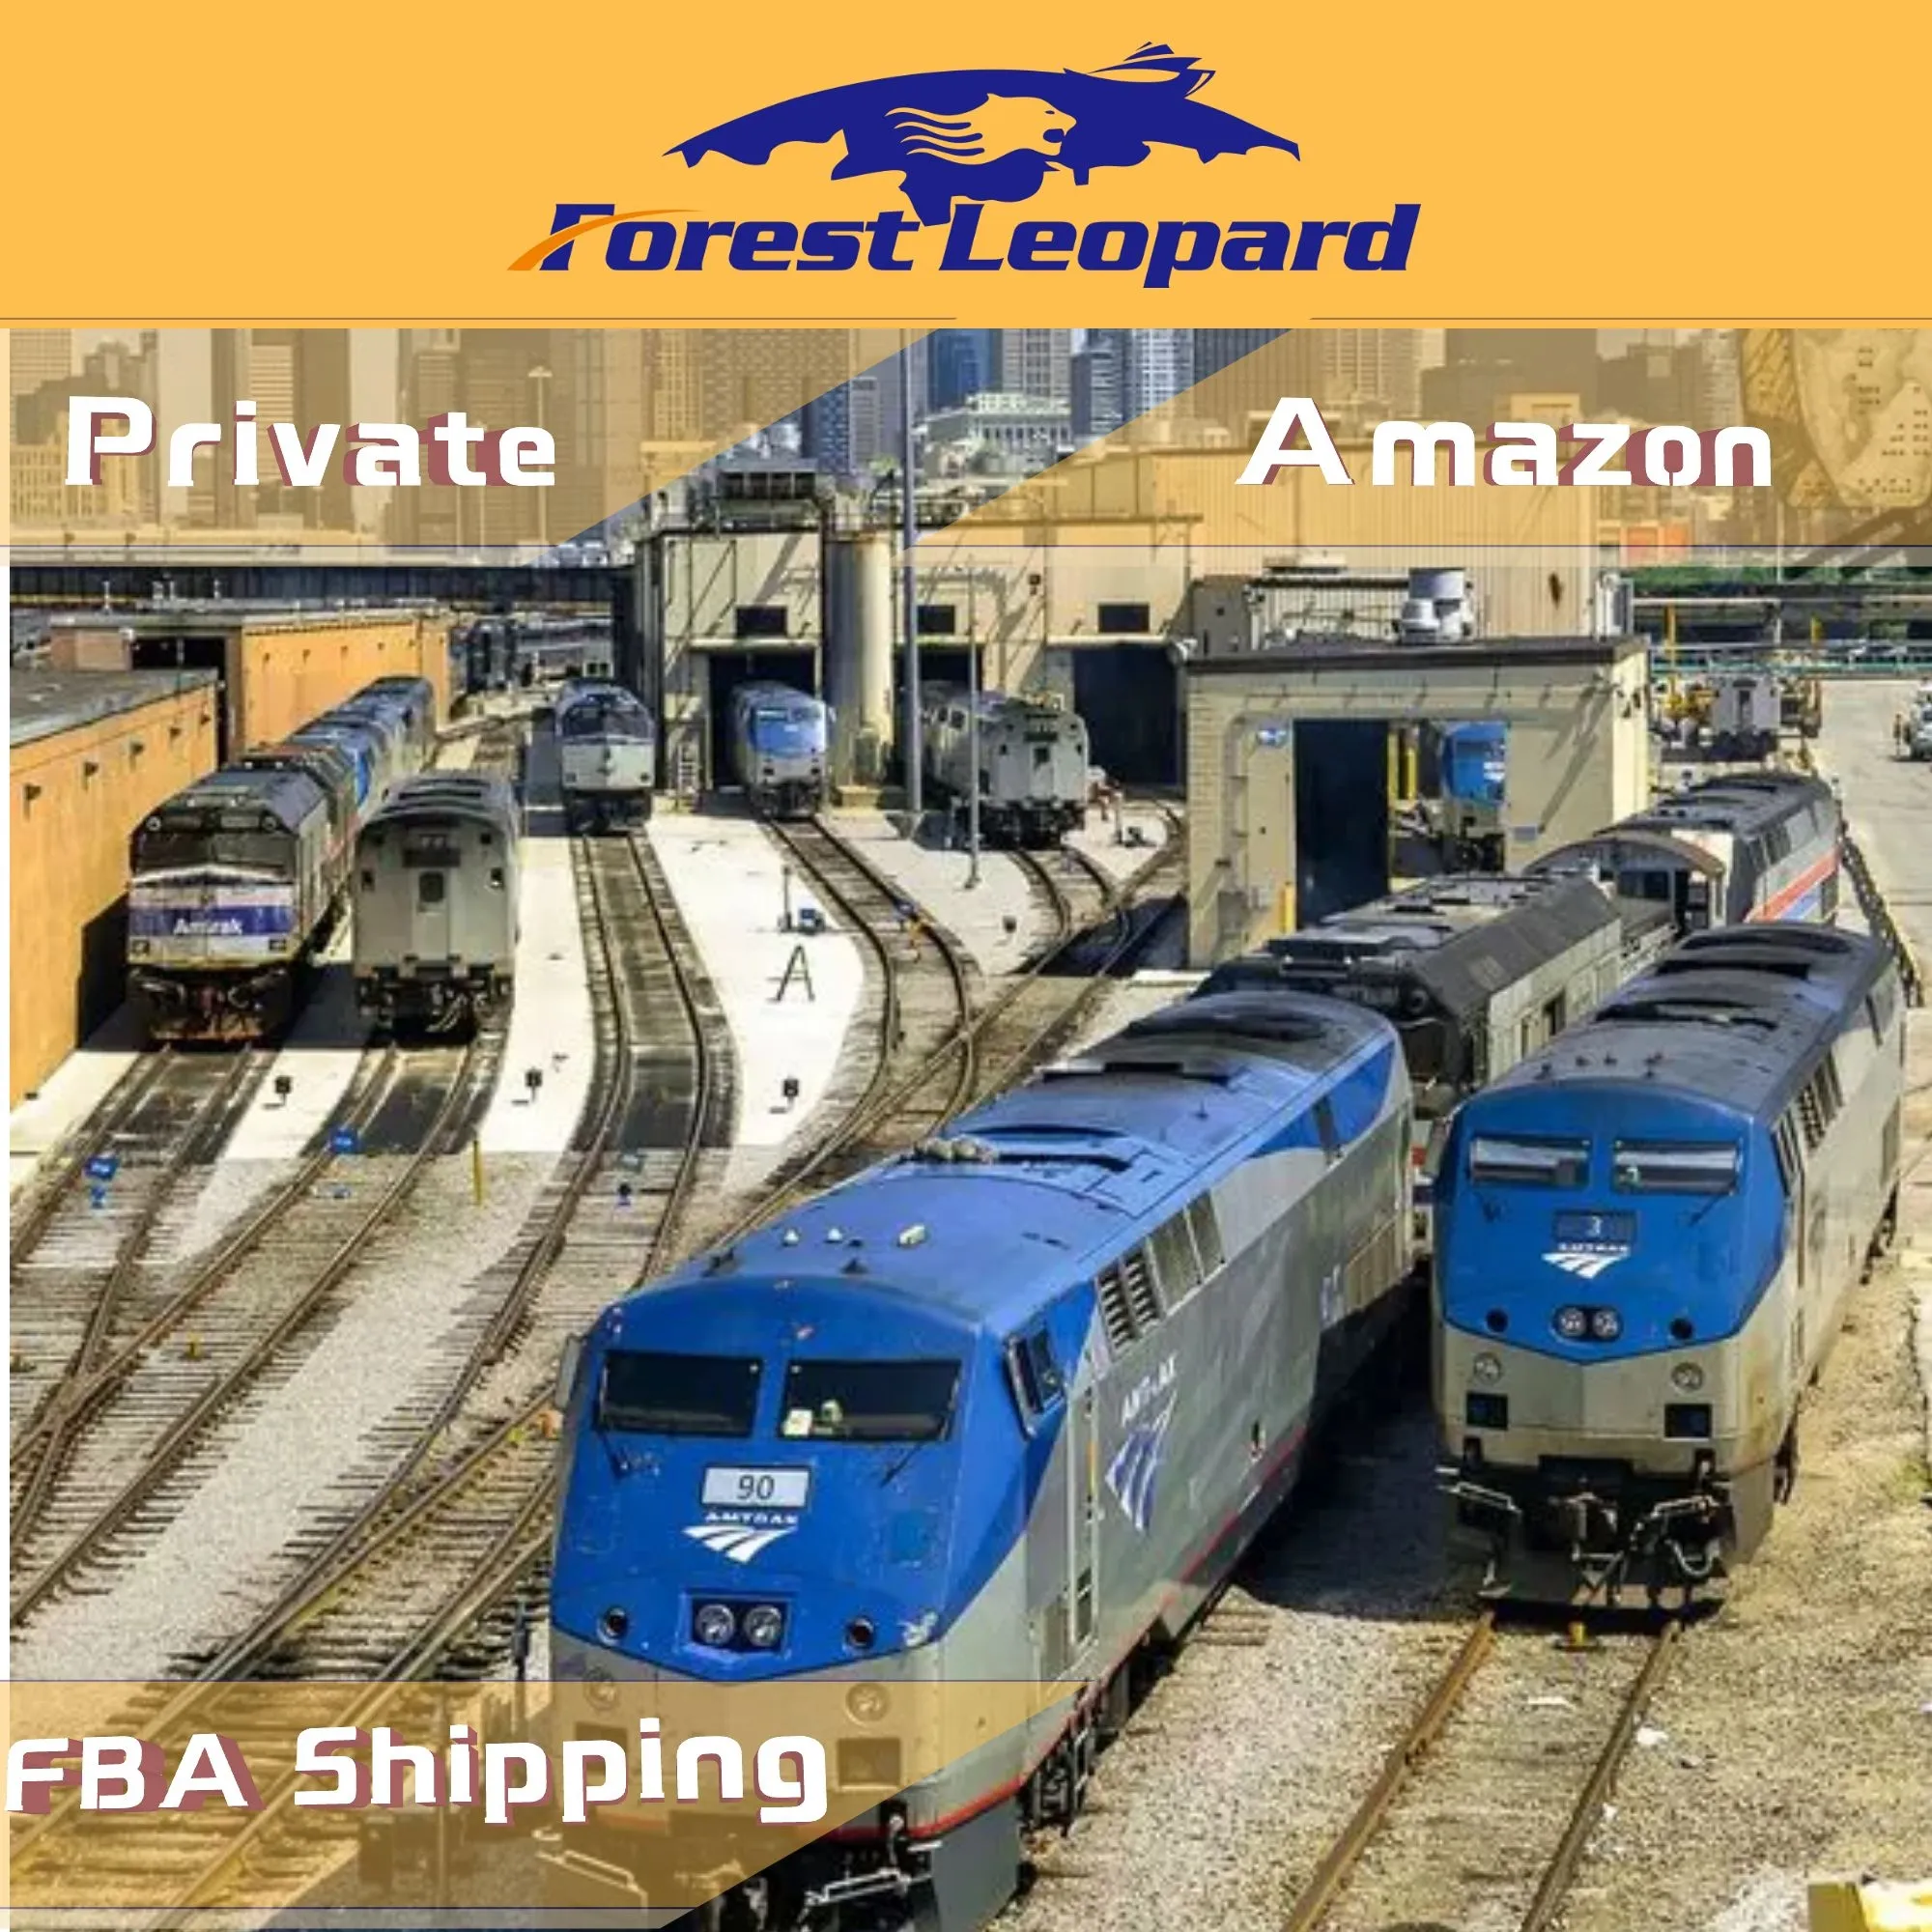 Amazon Warehouse Railway Shipping Shipping from China to Germany International Transportation Freight Forwarder Amazon FBA